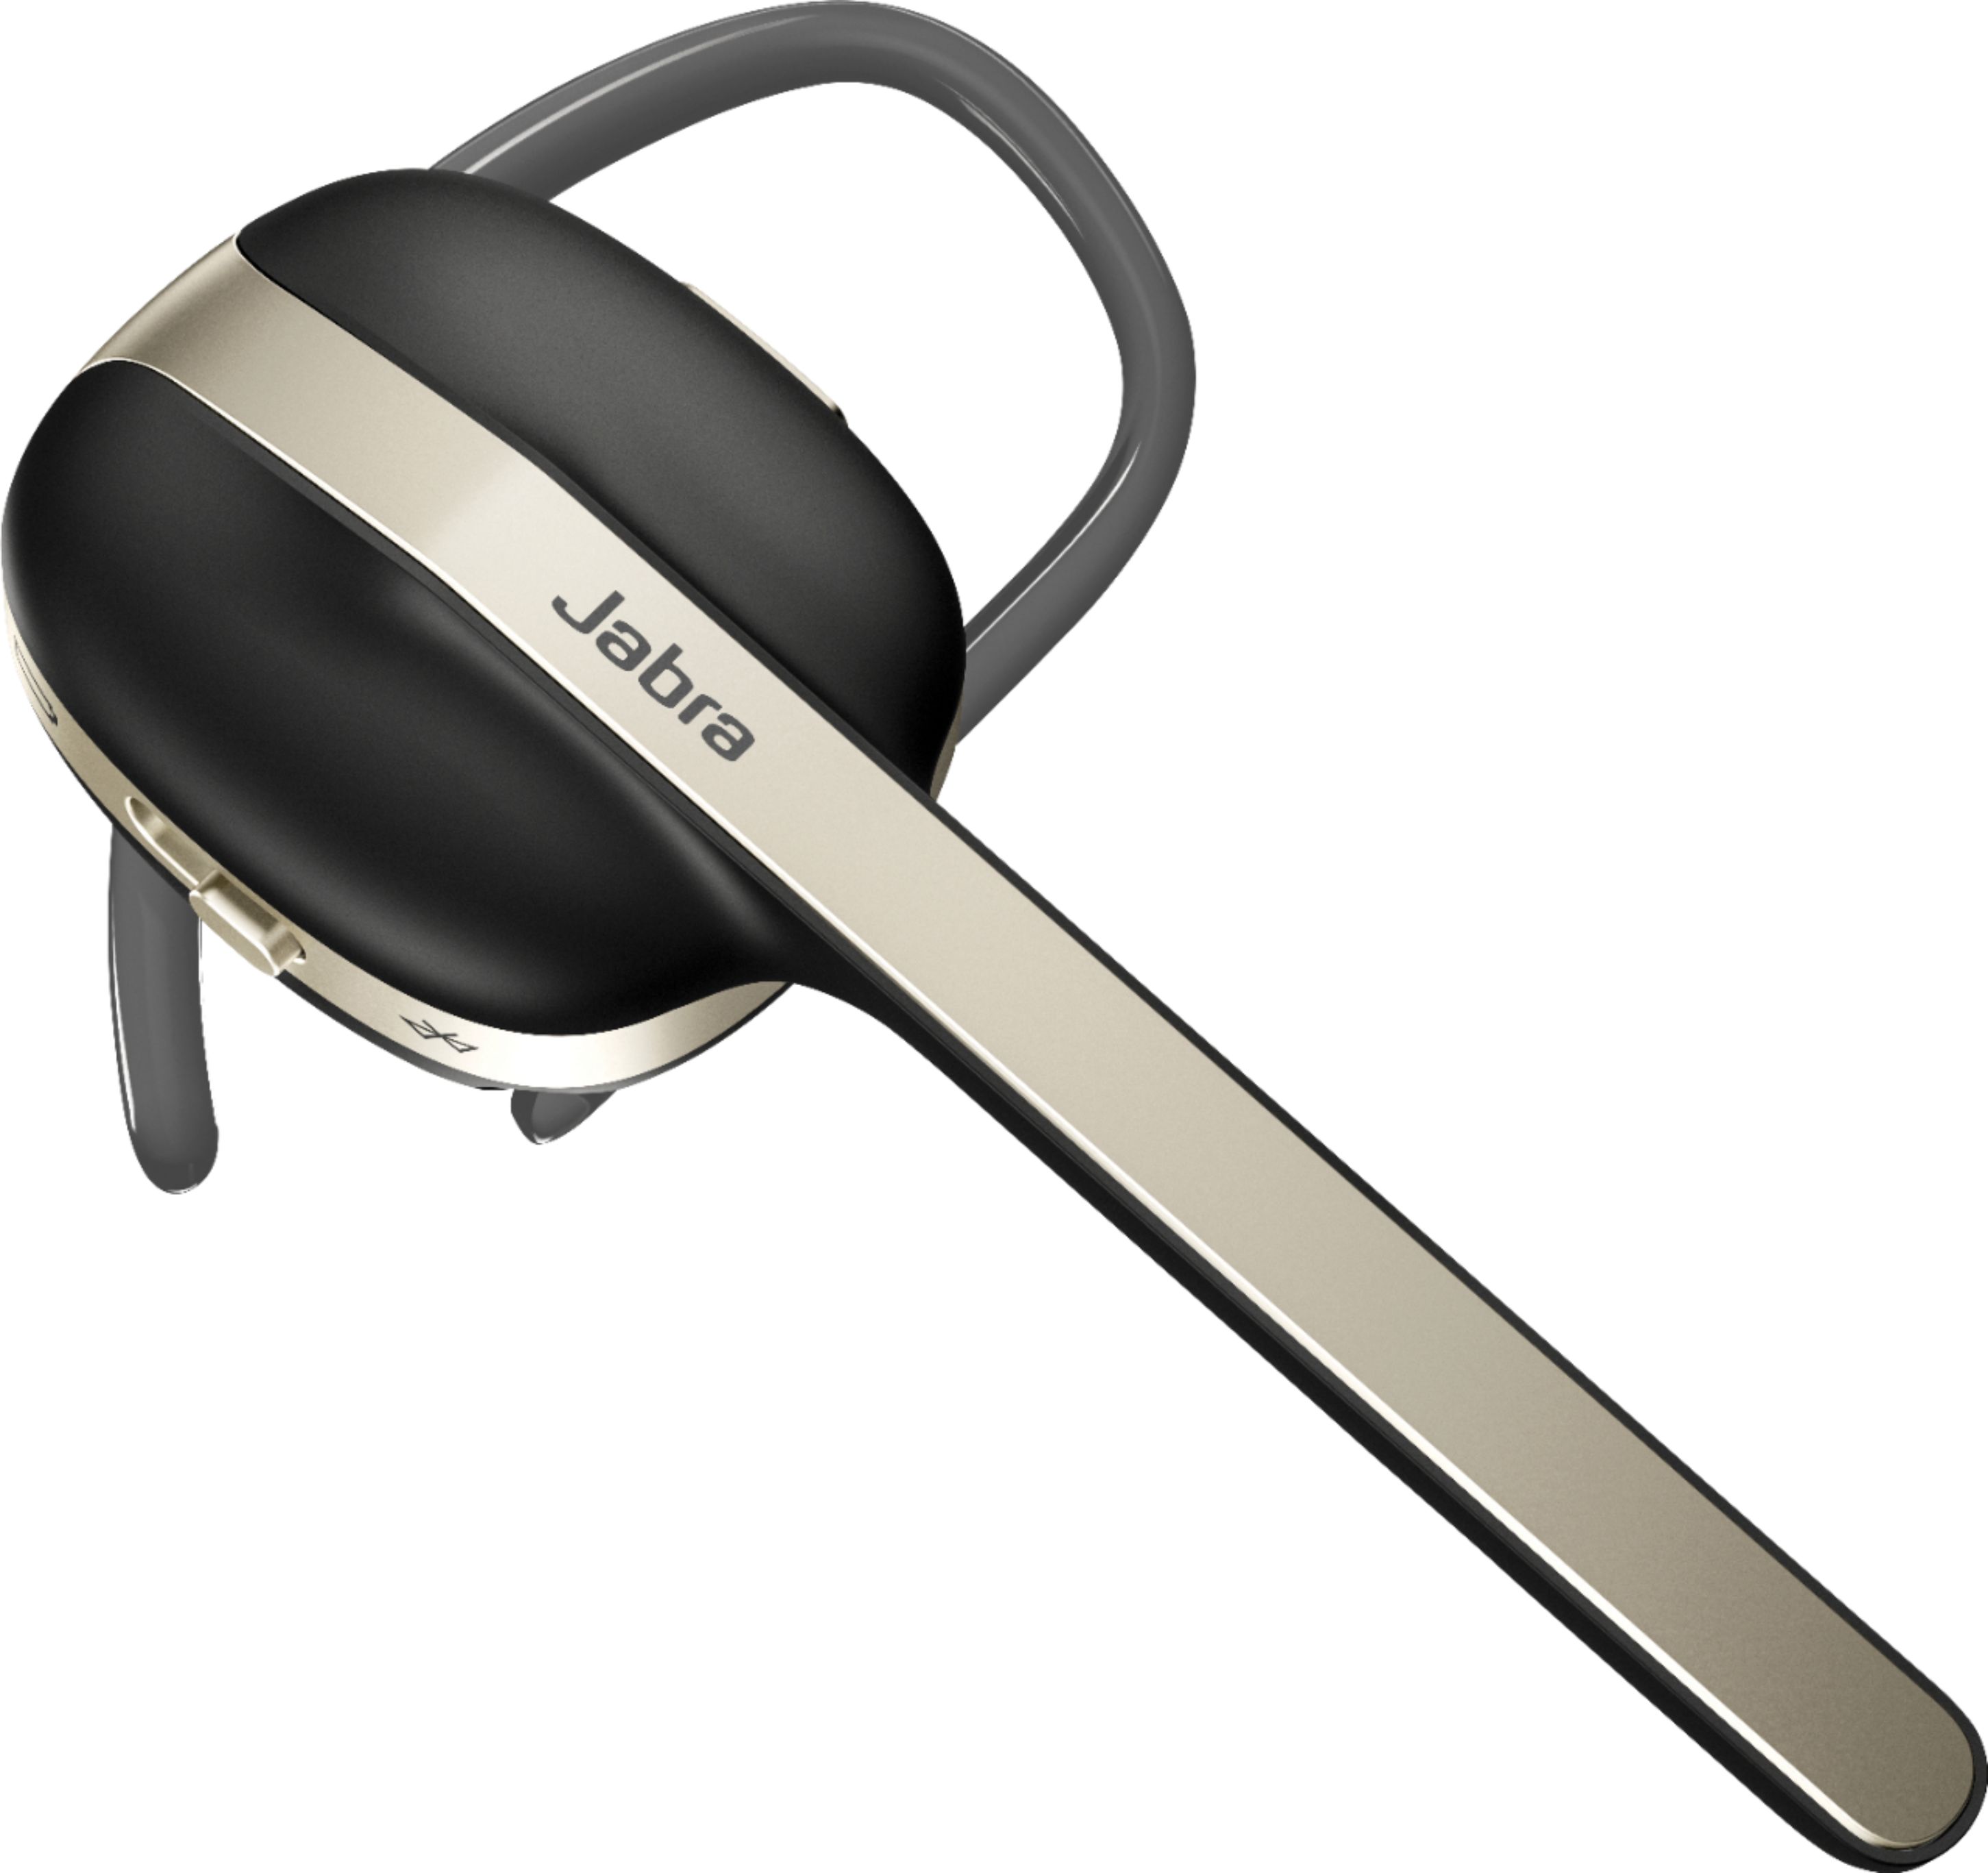 Jabra Talk 30 Bluetooth Headset Black/Silver 100-99600900-14 - Buy